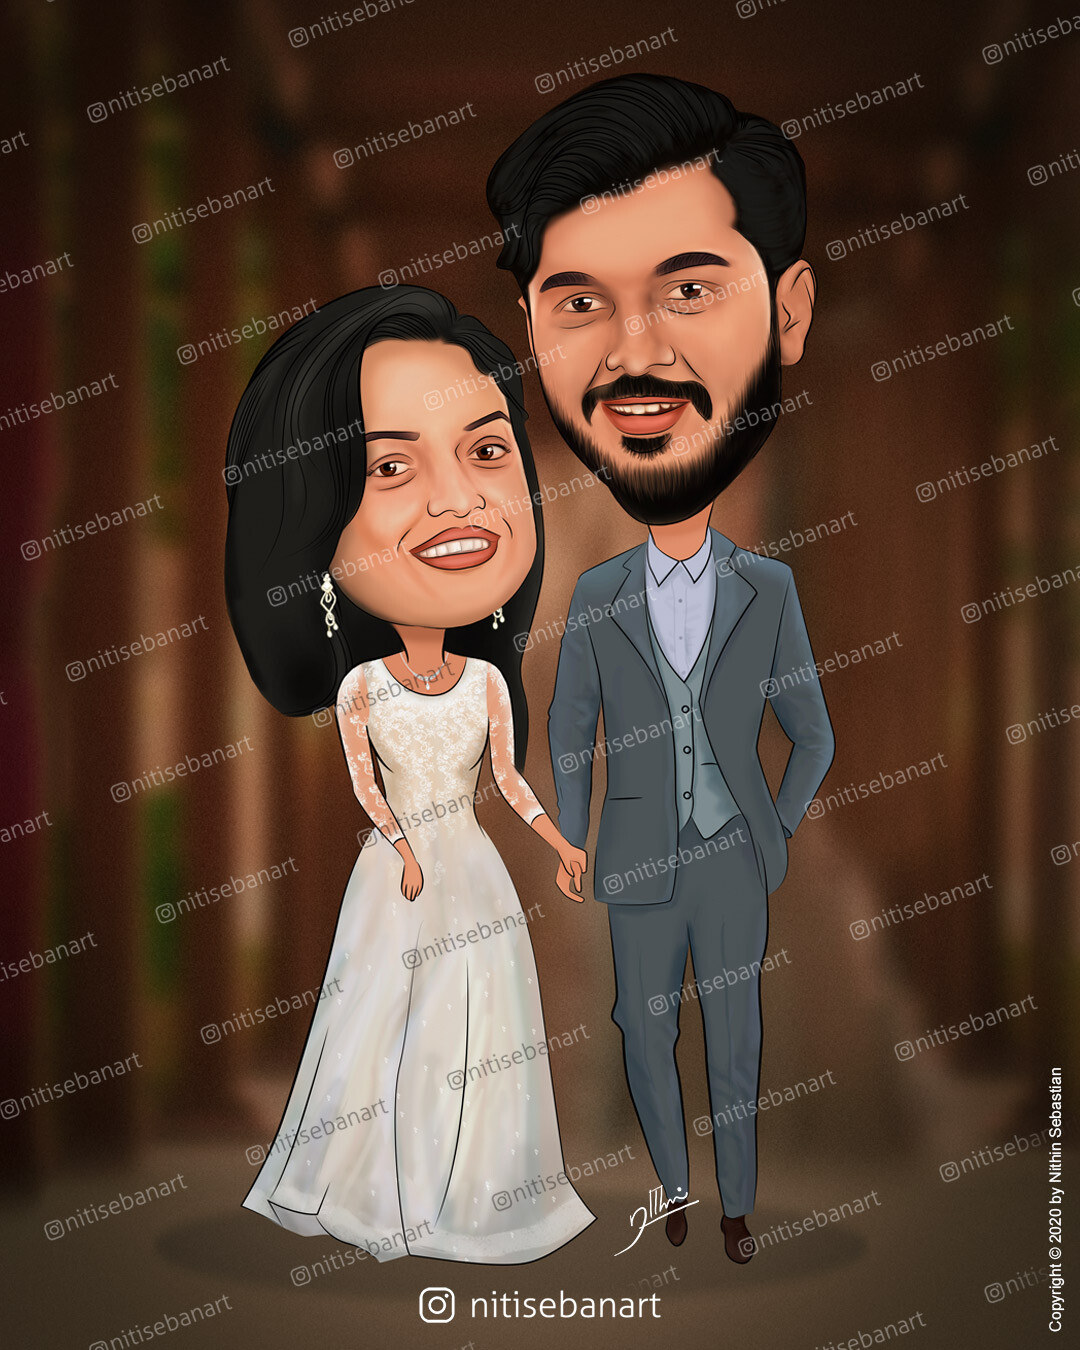 ArtStation - Kerala Wedding caricature